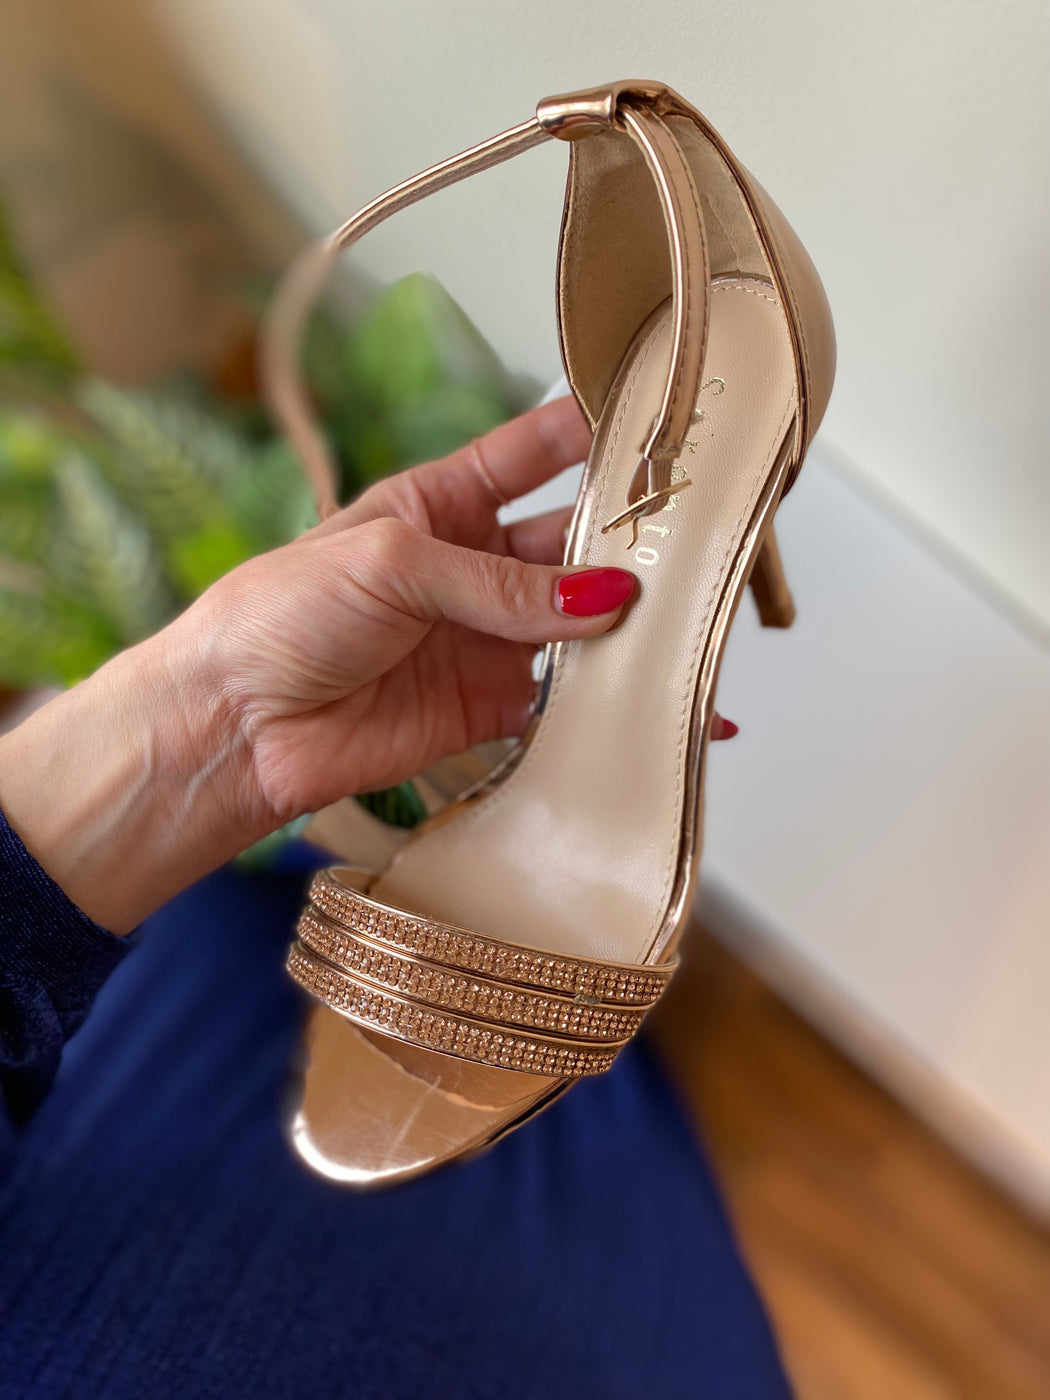 Rose gold Preston heels